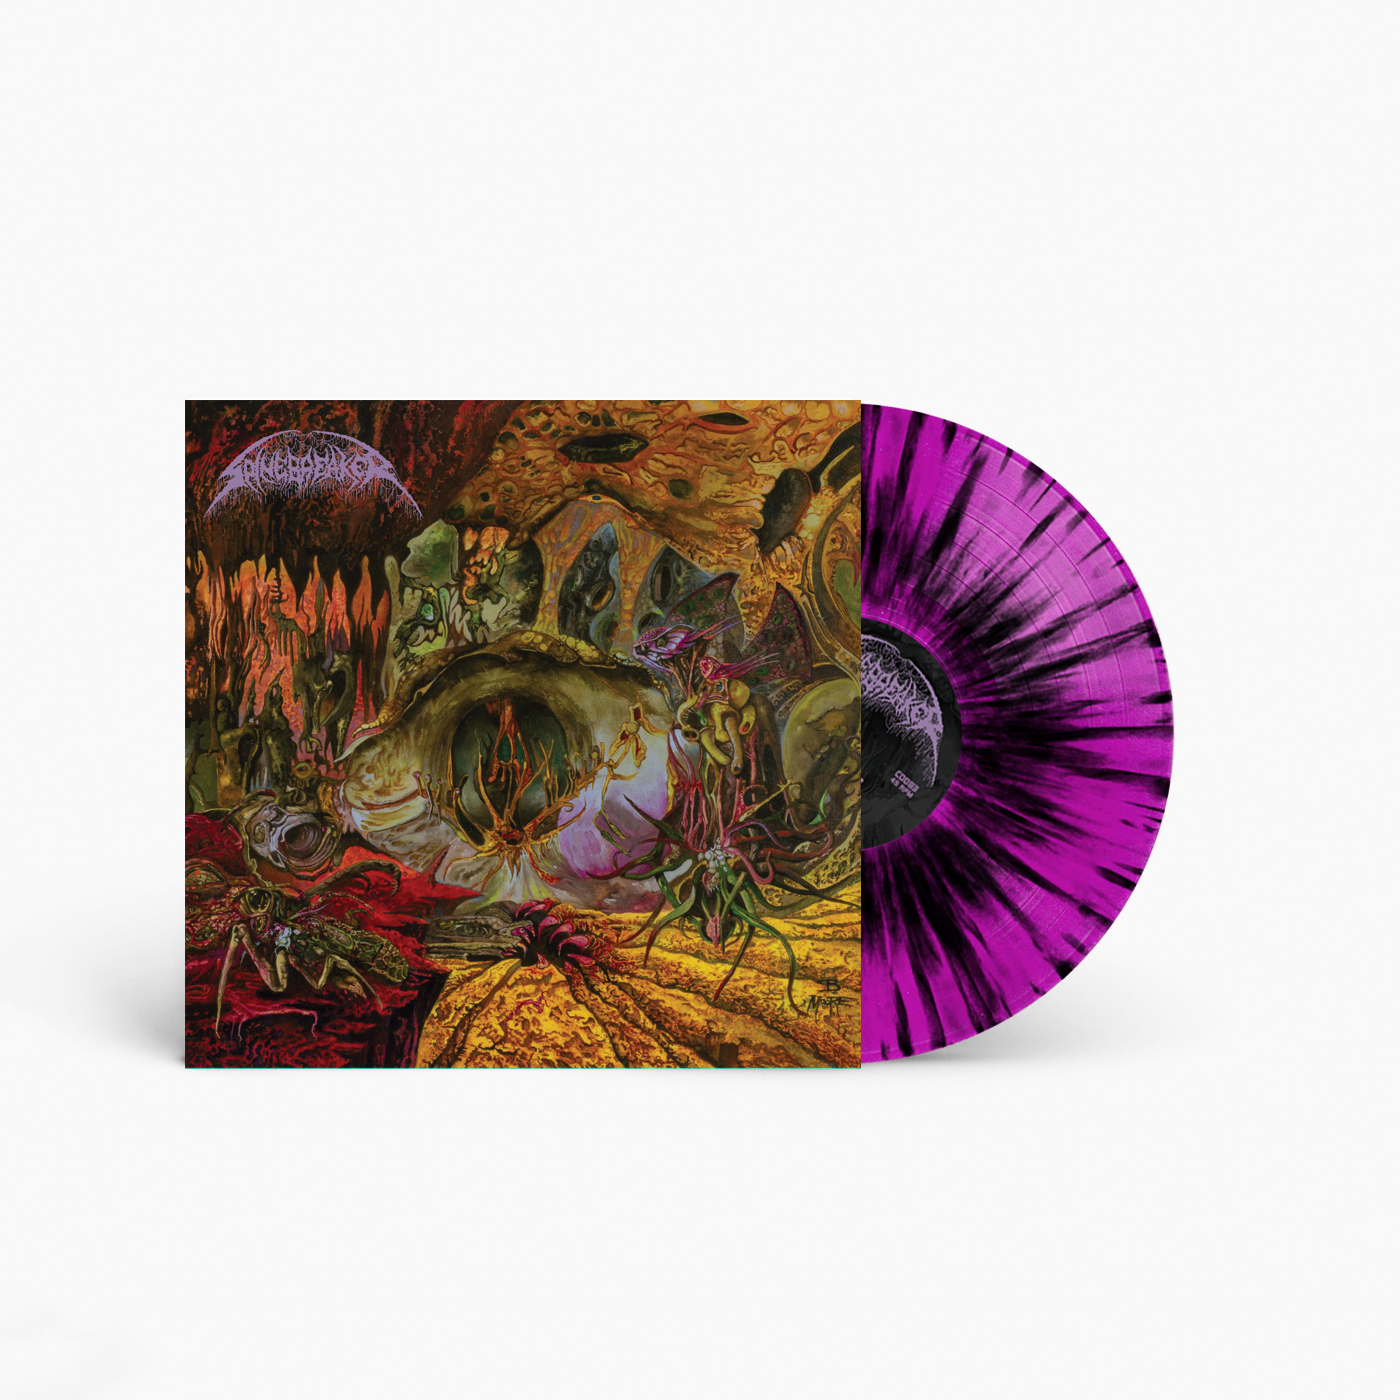 Spinebreaker "Cavern of Inoculated Cognition" 12" EP (Purple w/ Black Splatter)